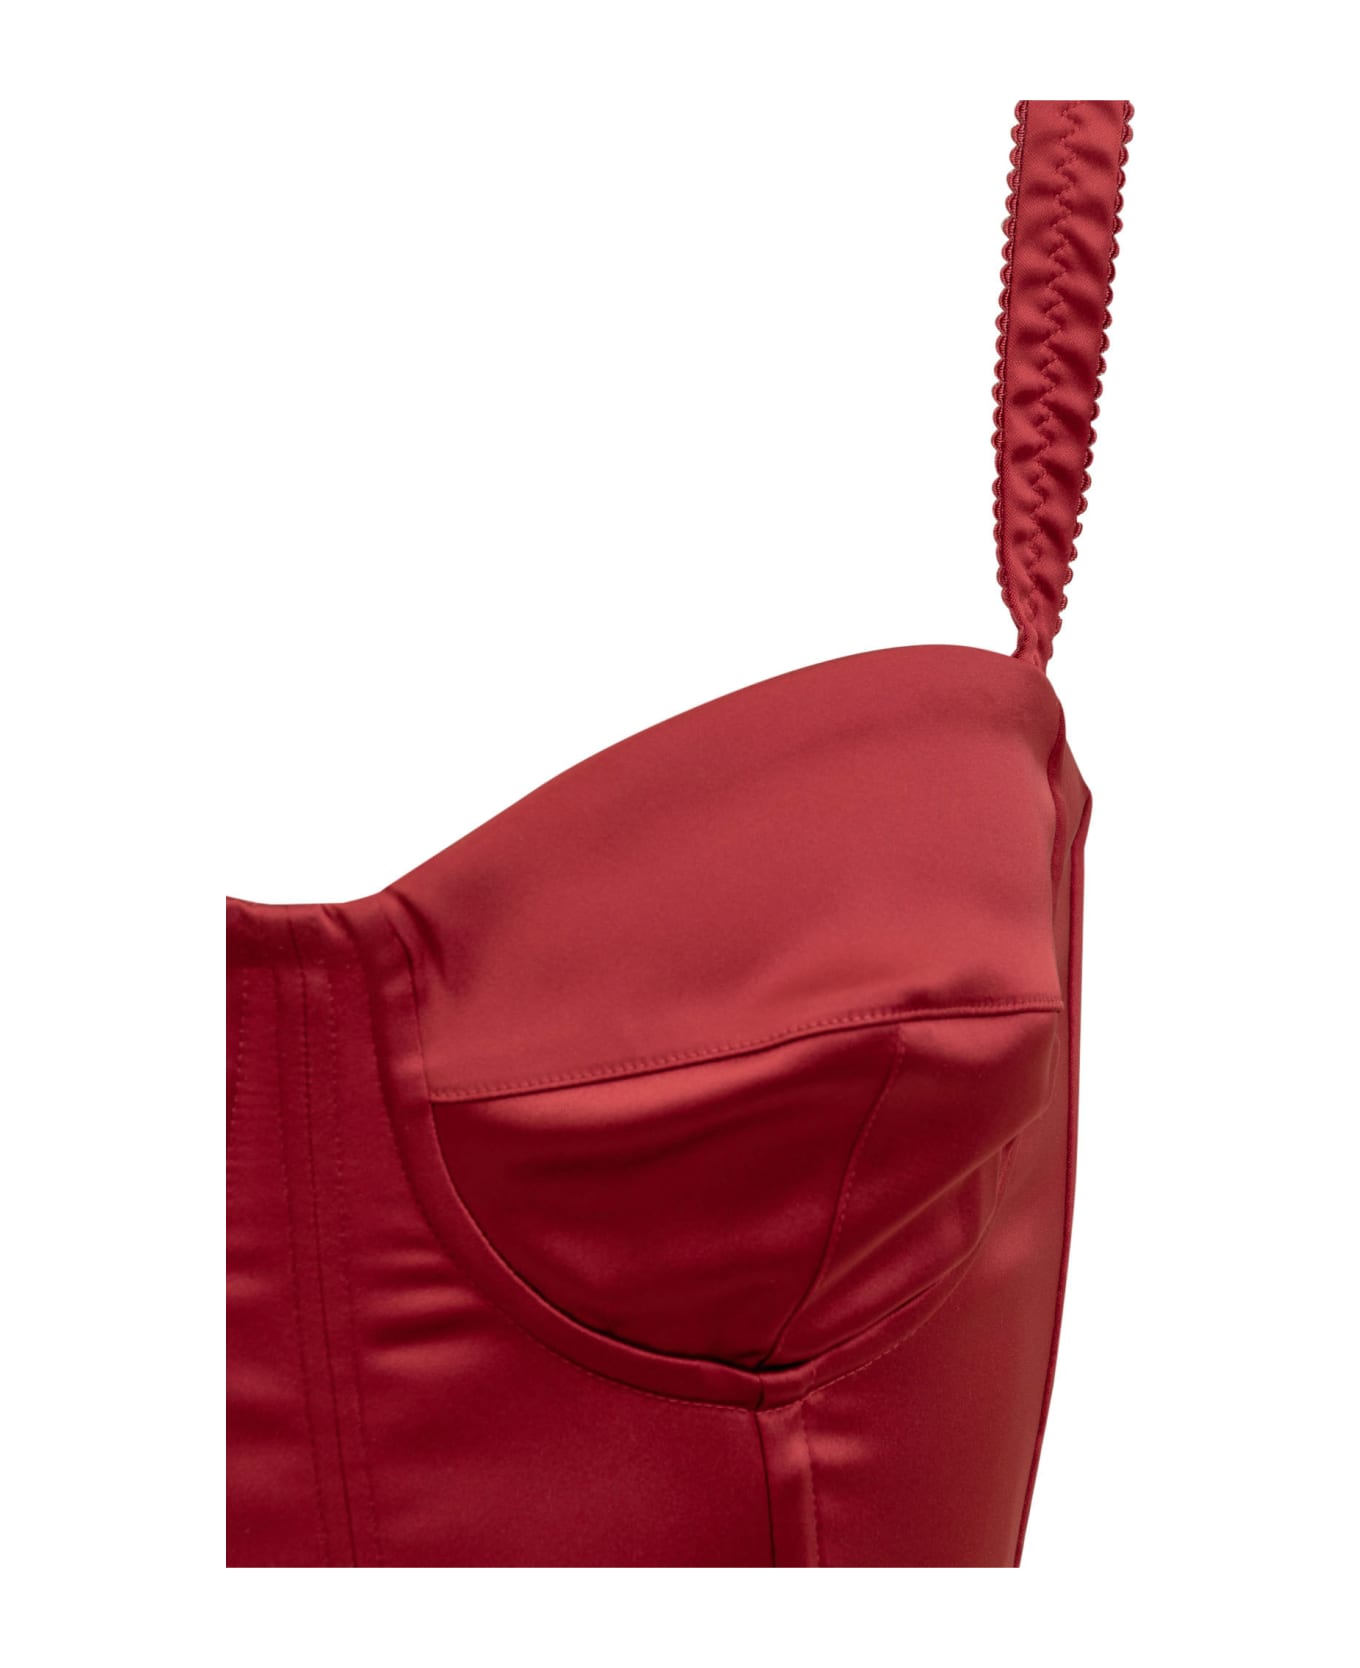 Dolce & Gabbana Bustier Midi Dress - Deep Red